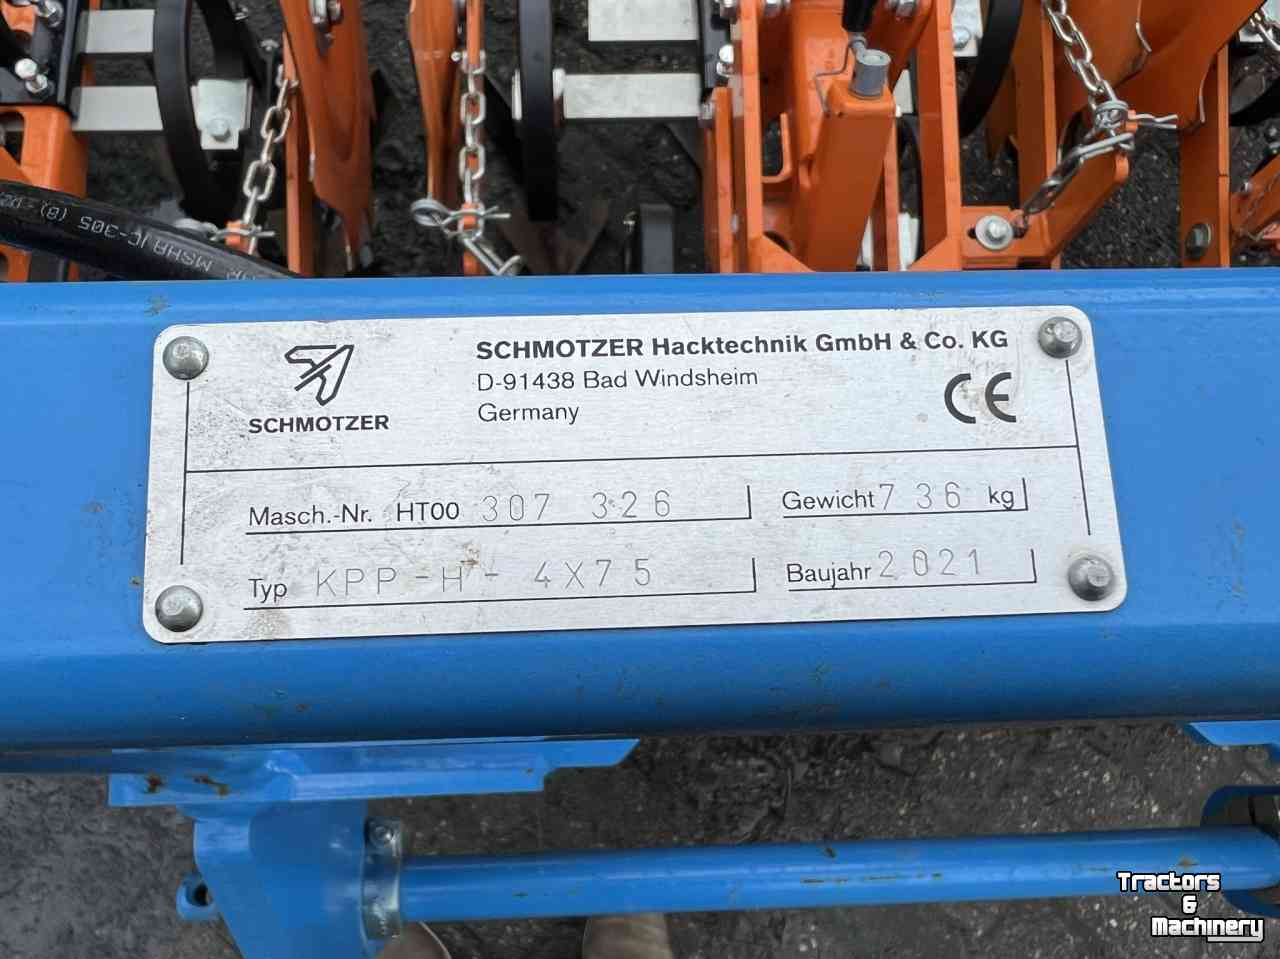 Bineuse Schmotzer KPP-H-4x75 schoffelmachine